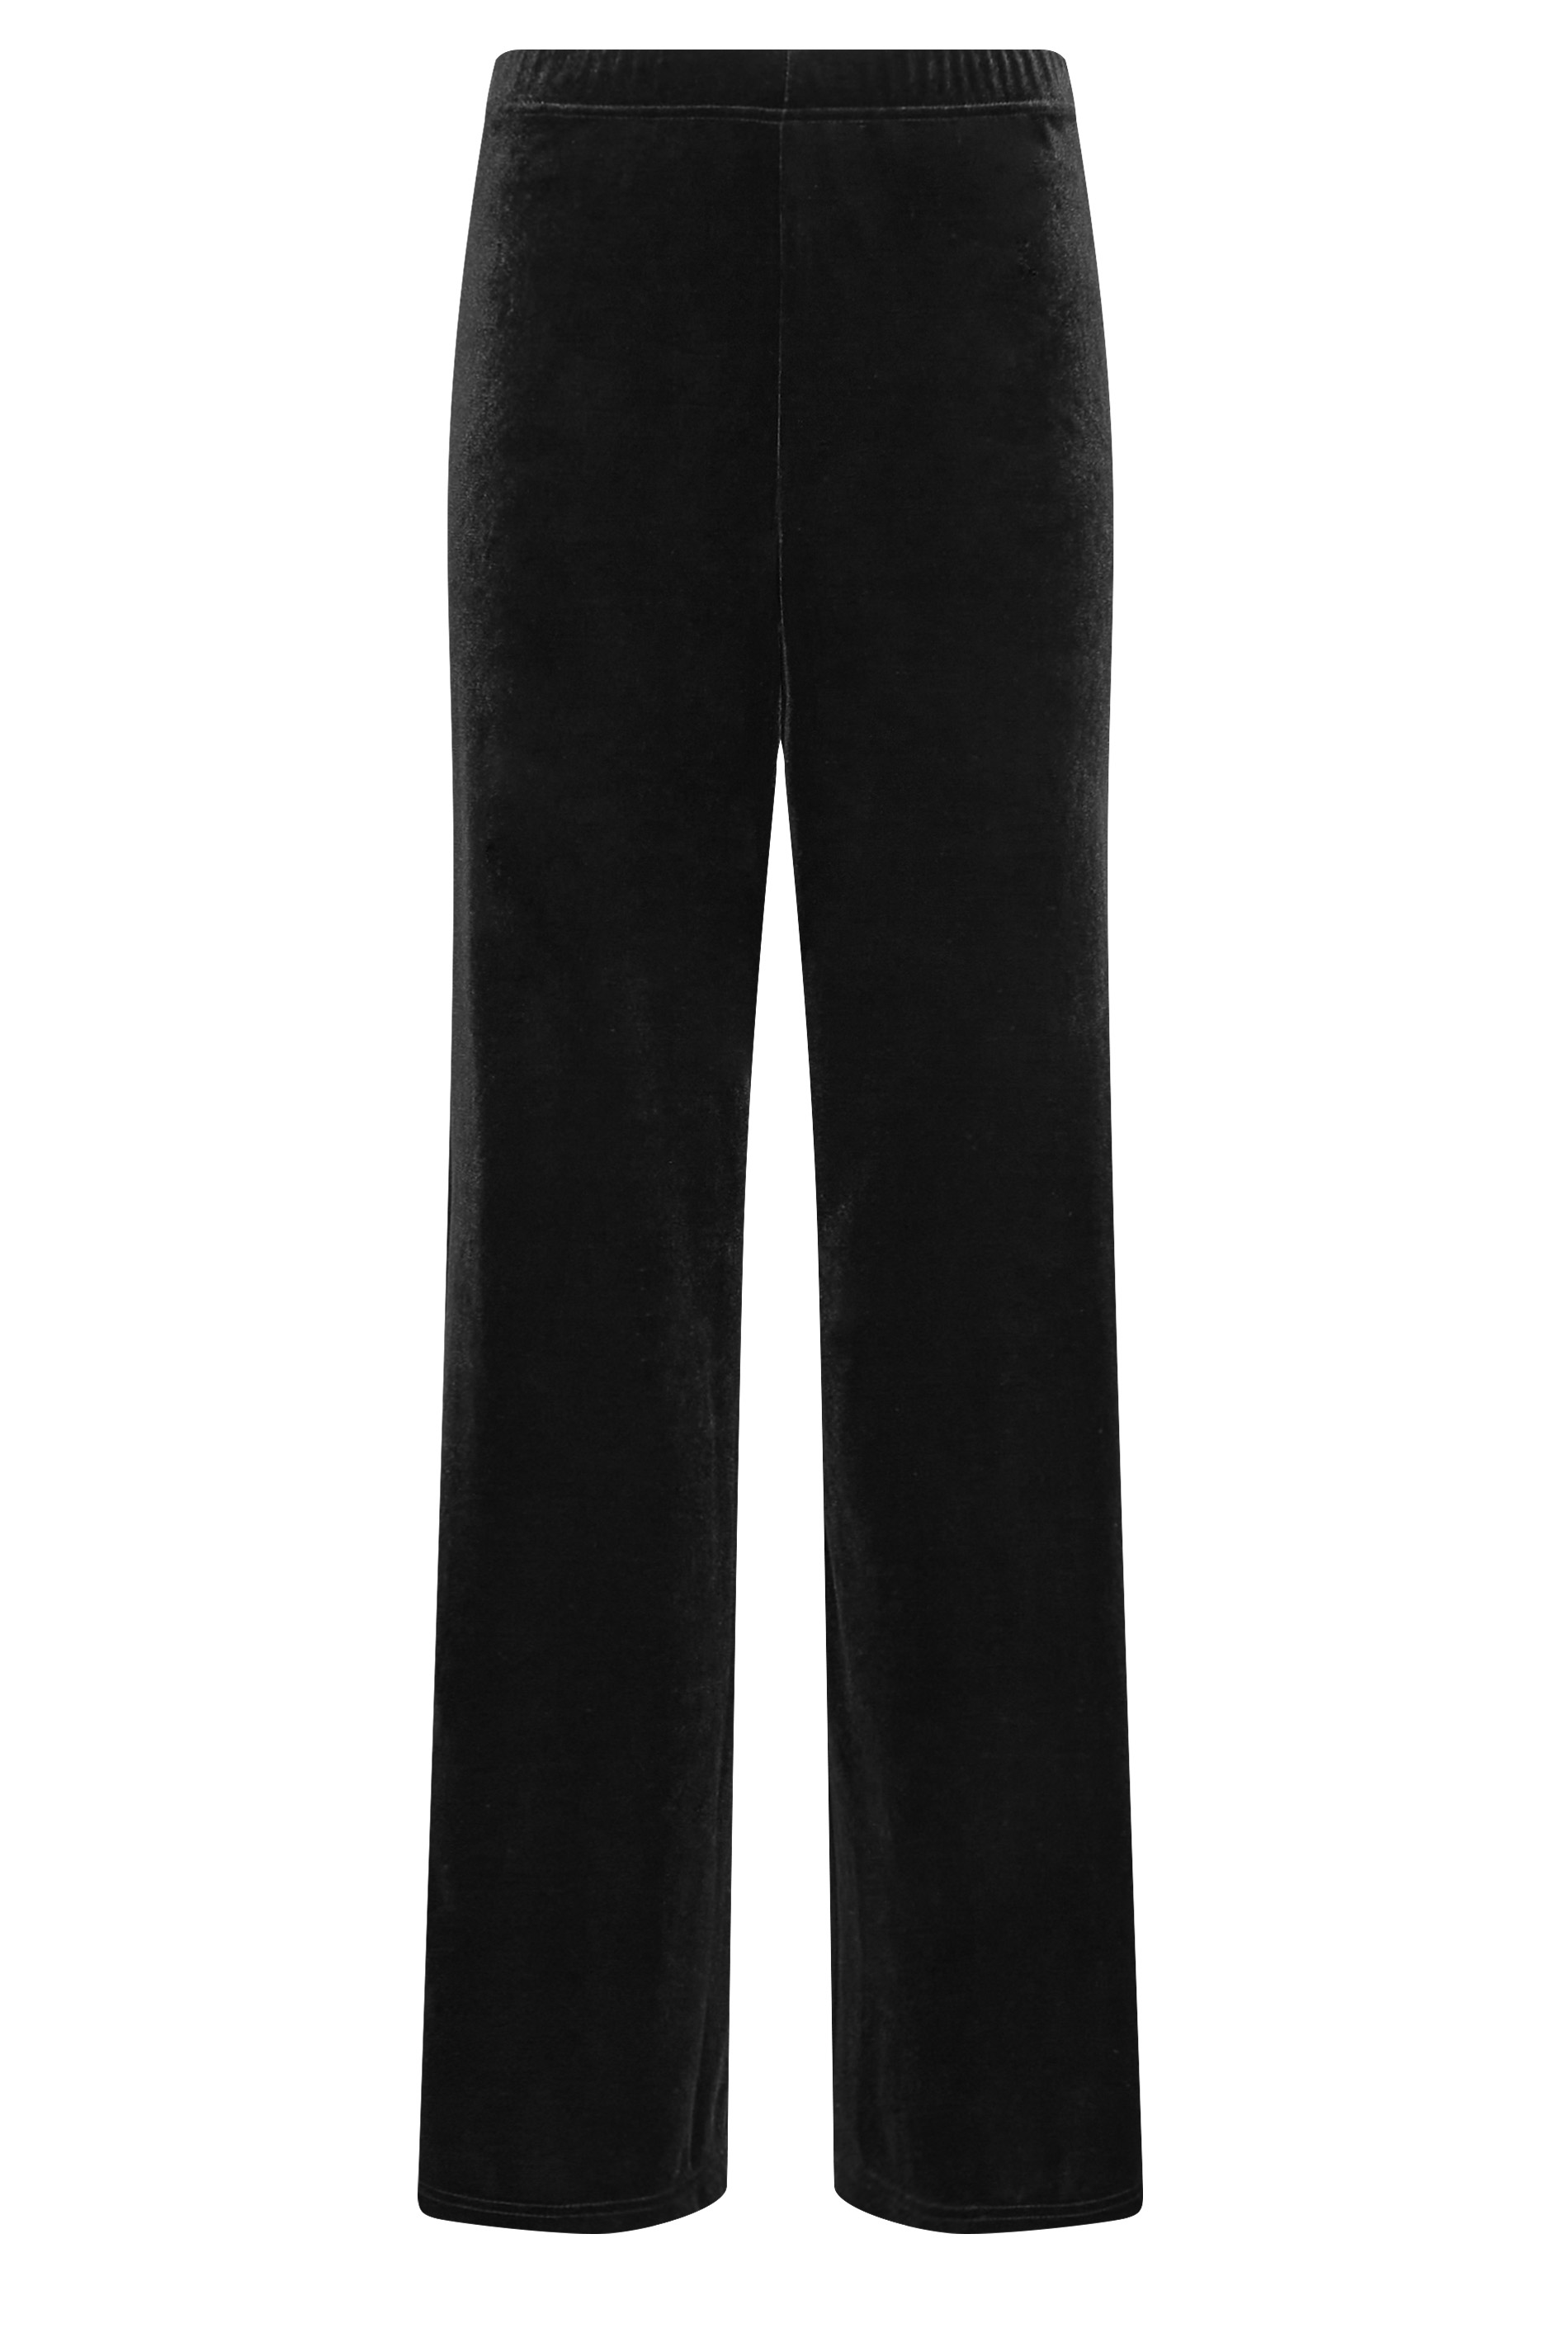 LTS Tall Women's Black Velvet Wide Leg Trousers | Long Tall Sally 3